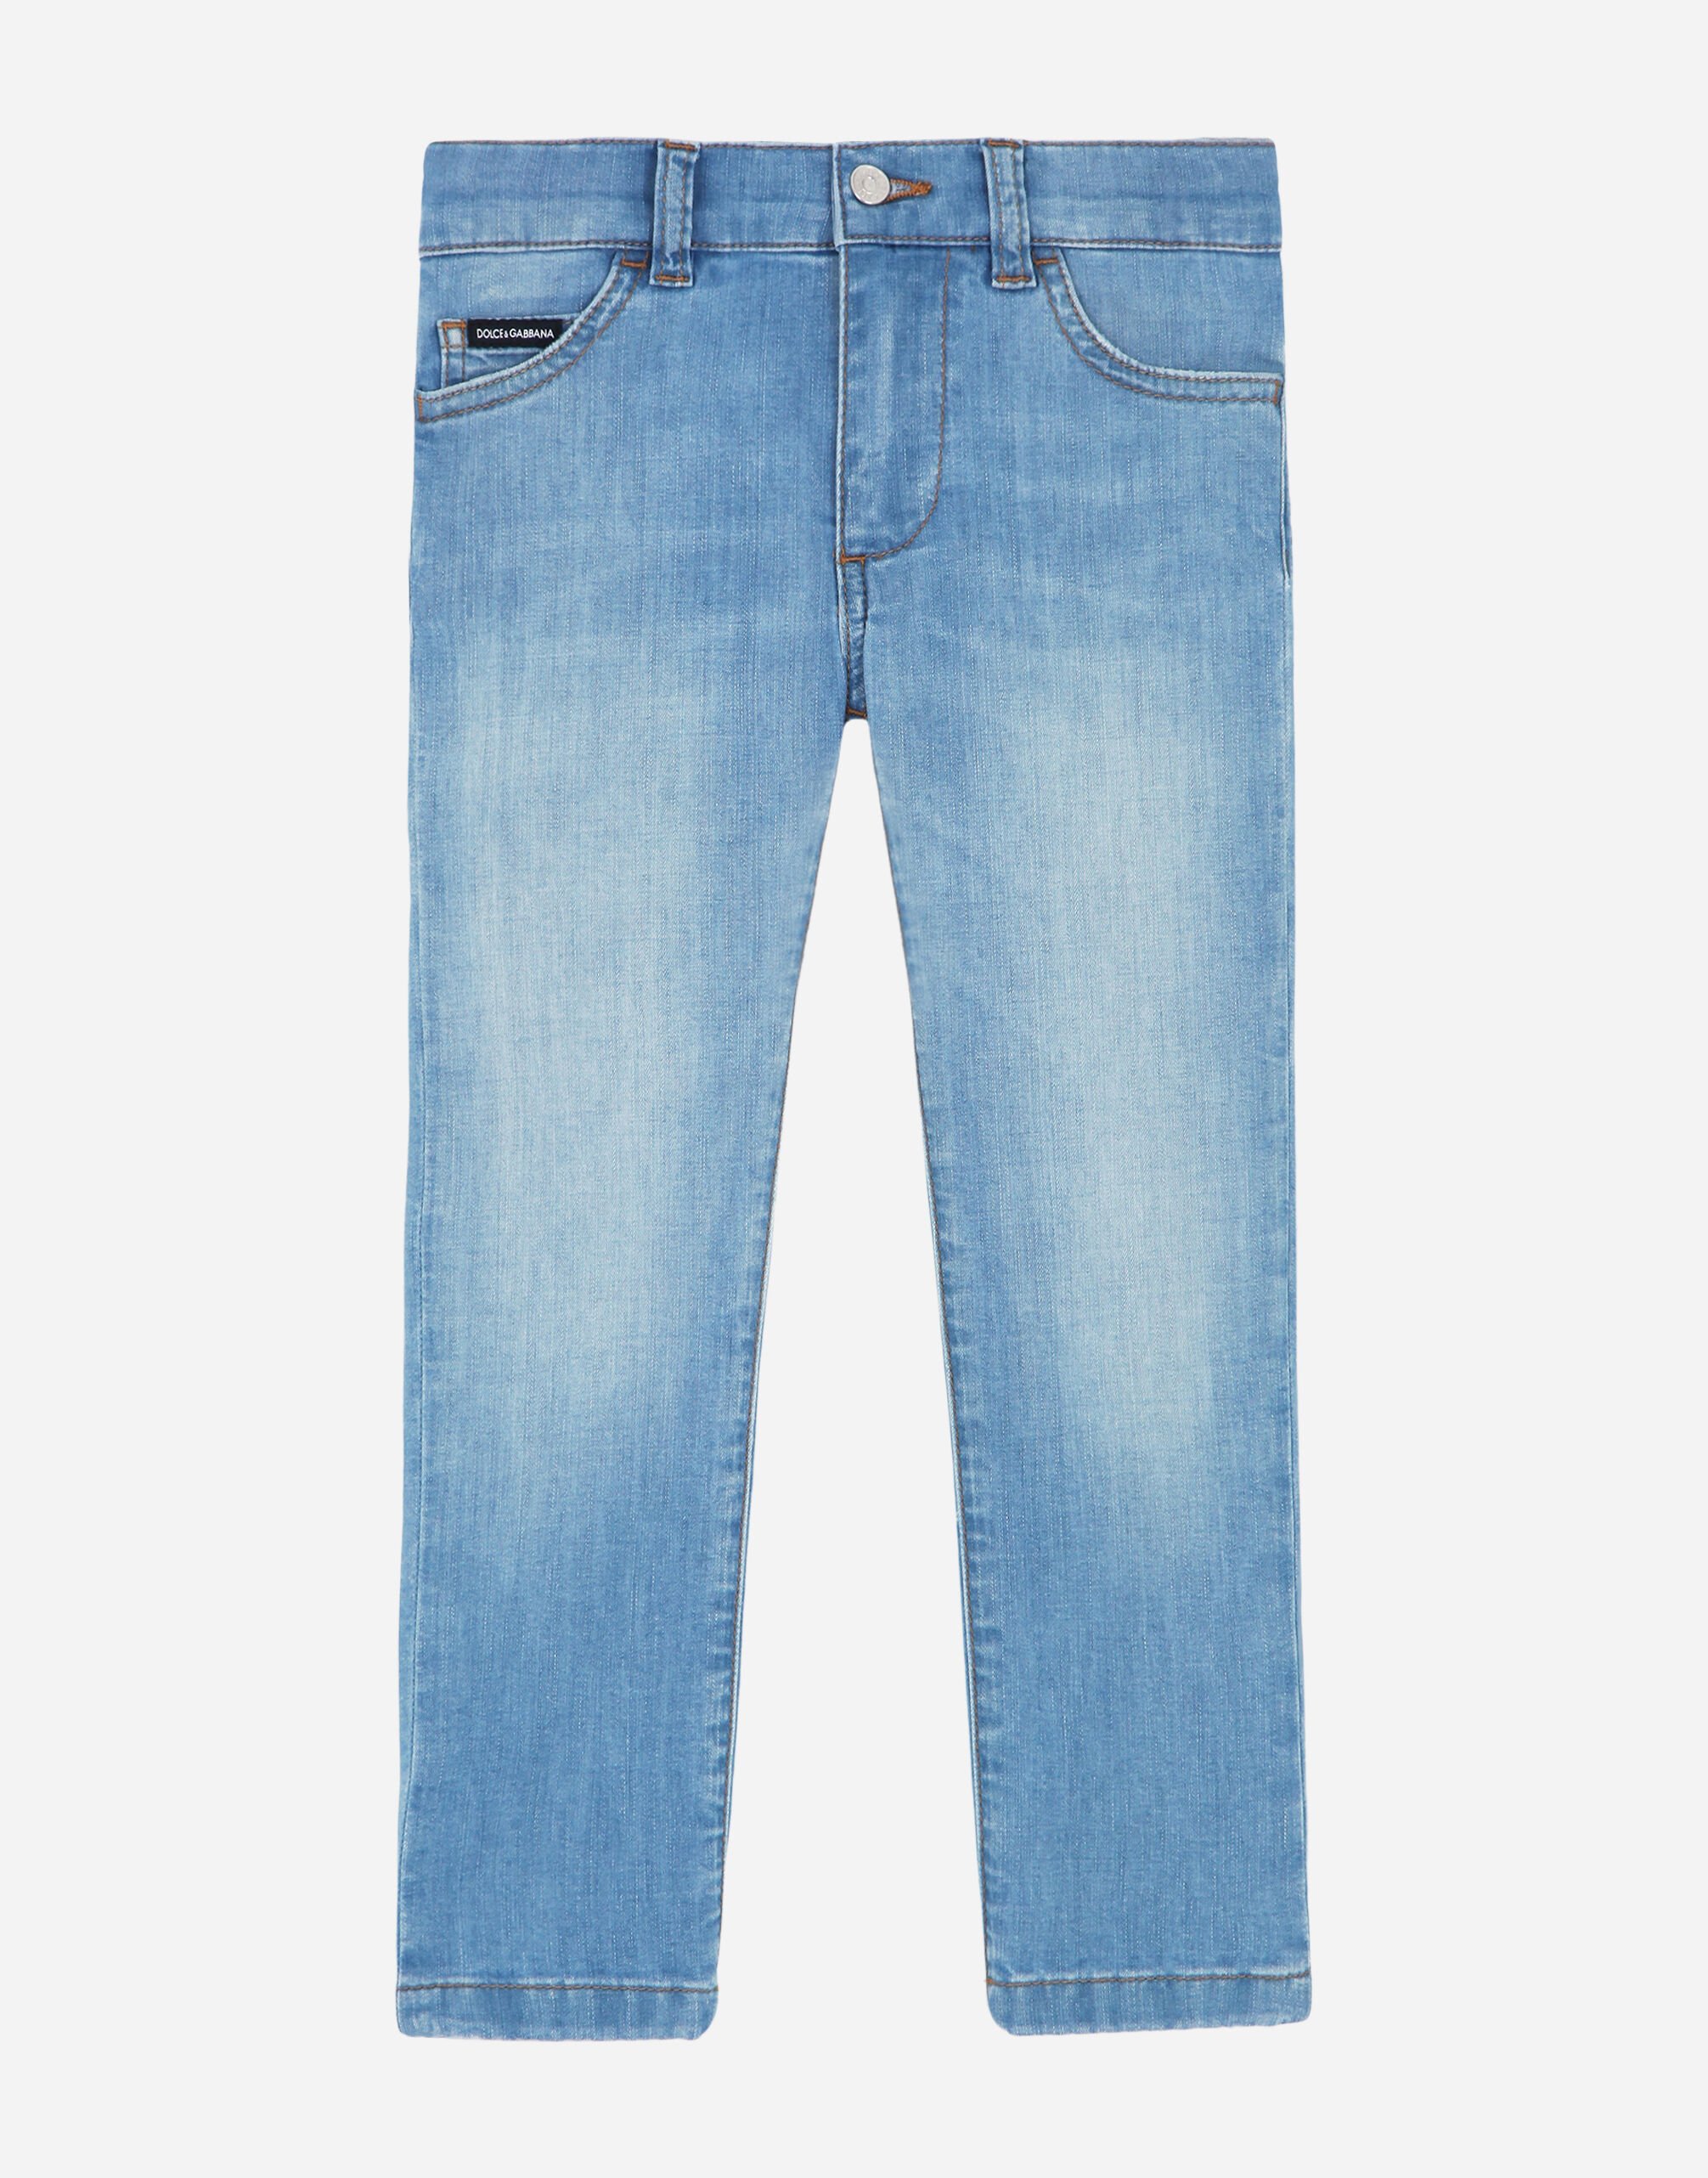 Dolce & Gabbana Stretch slim fit baby blue jeans Azure L42F15LD879